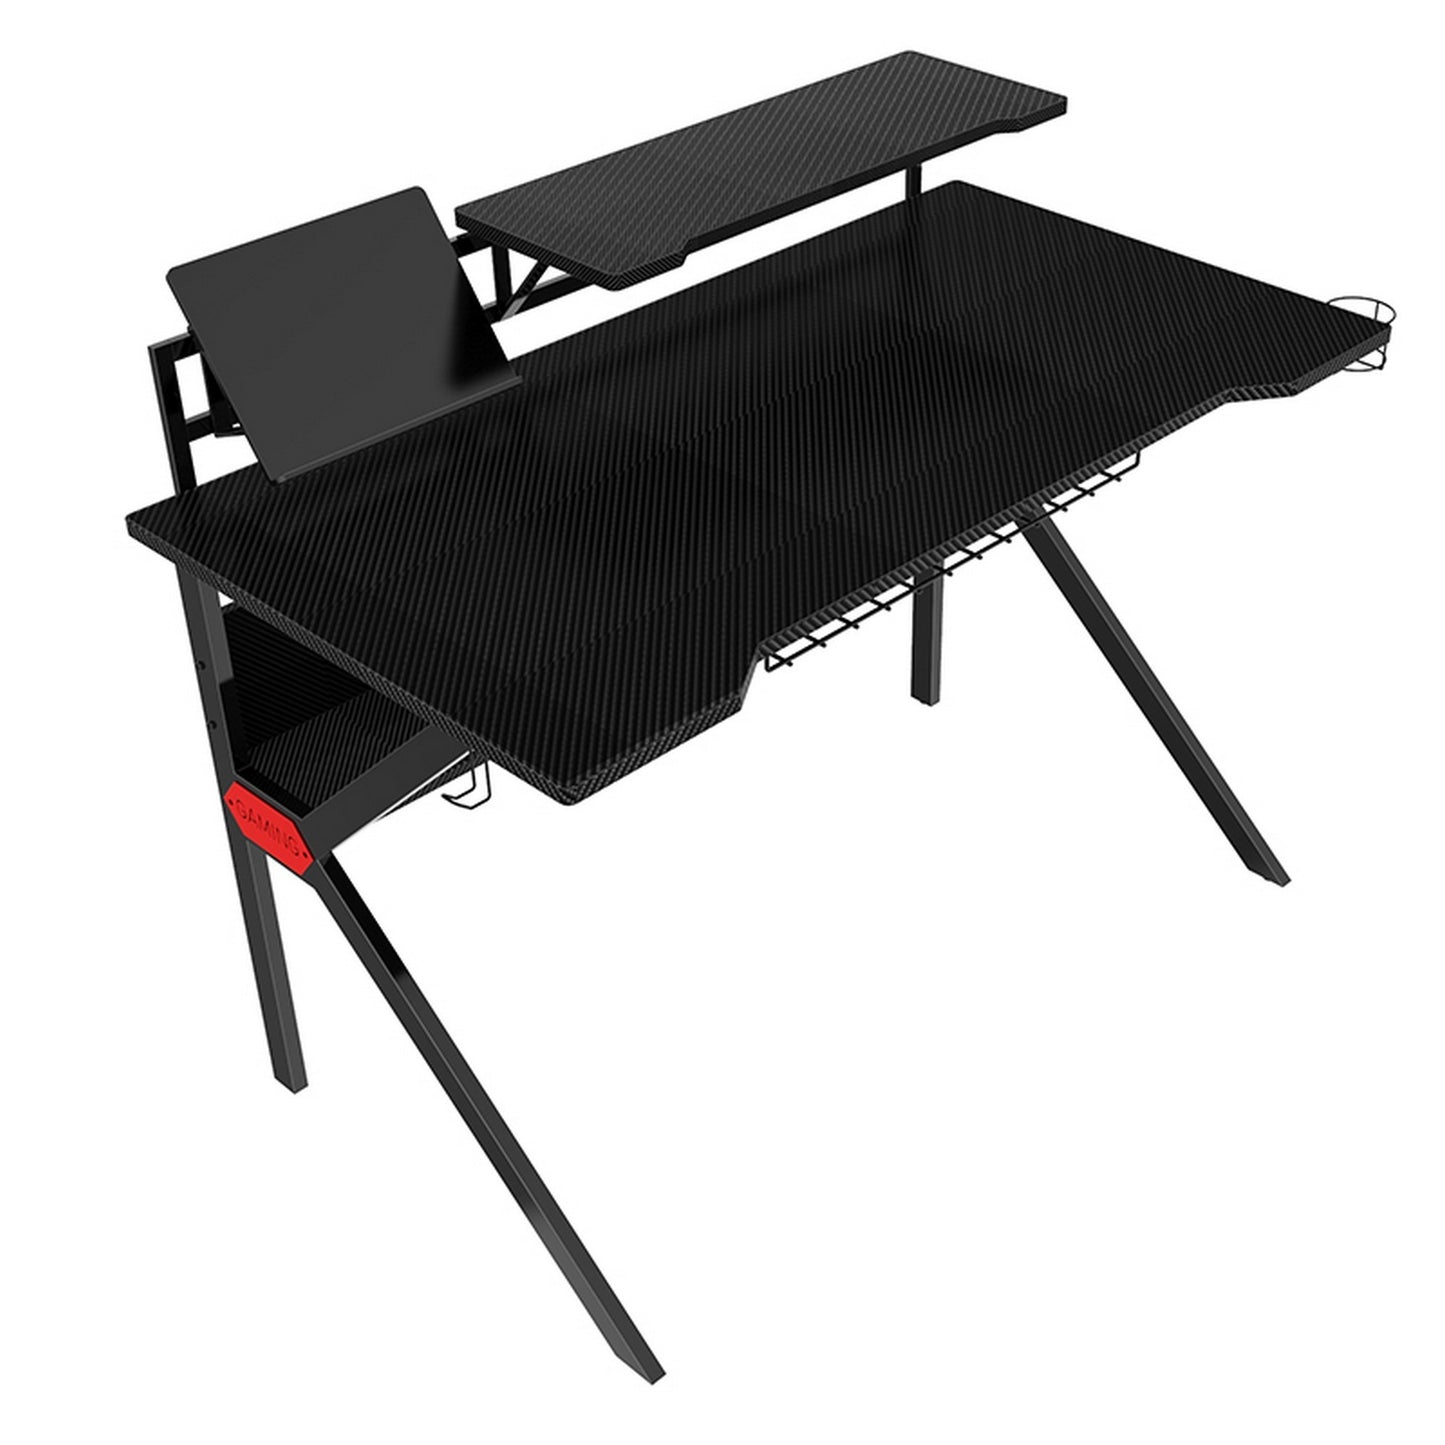 Ergonomic Metal Frame Gaming Desk with K Shape Legs, Black